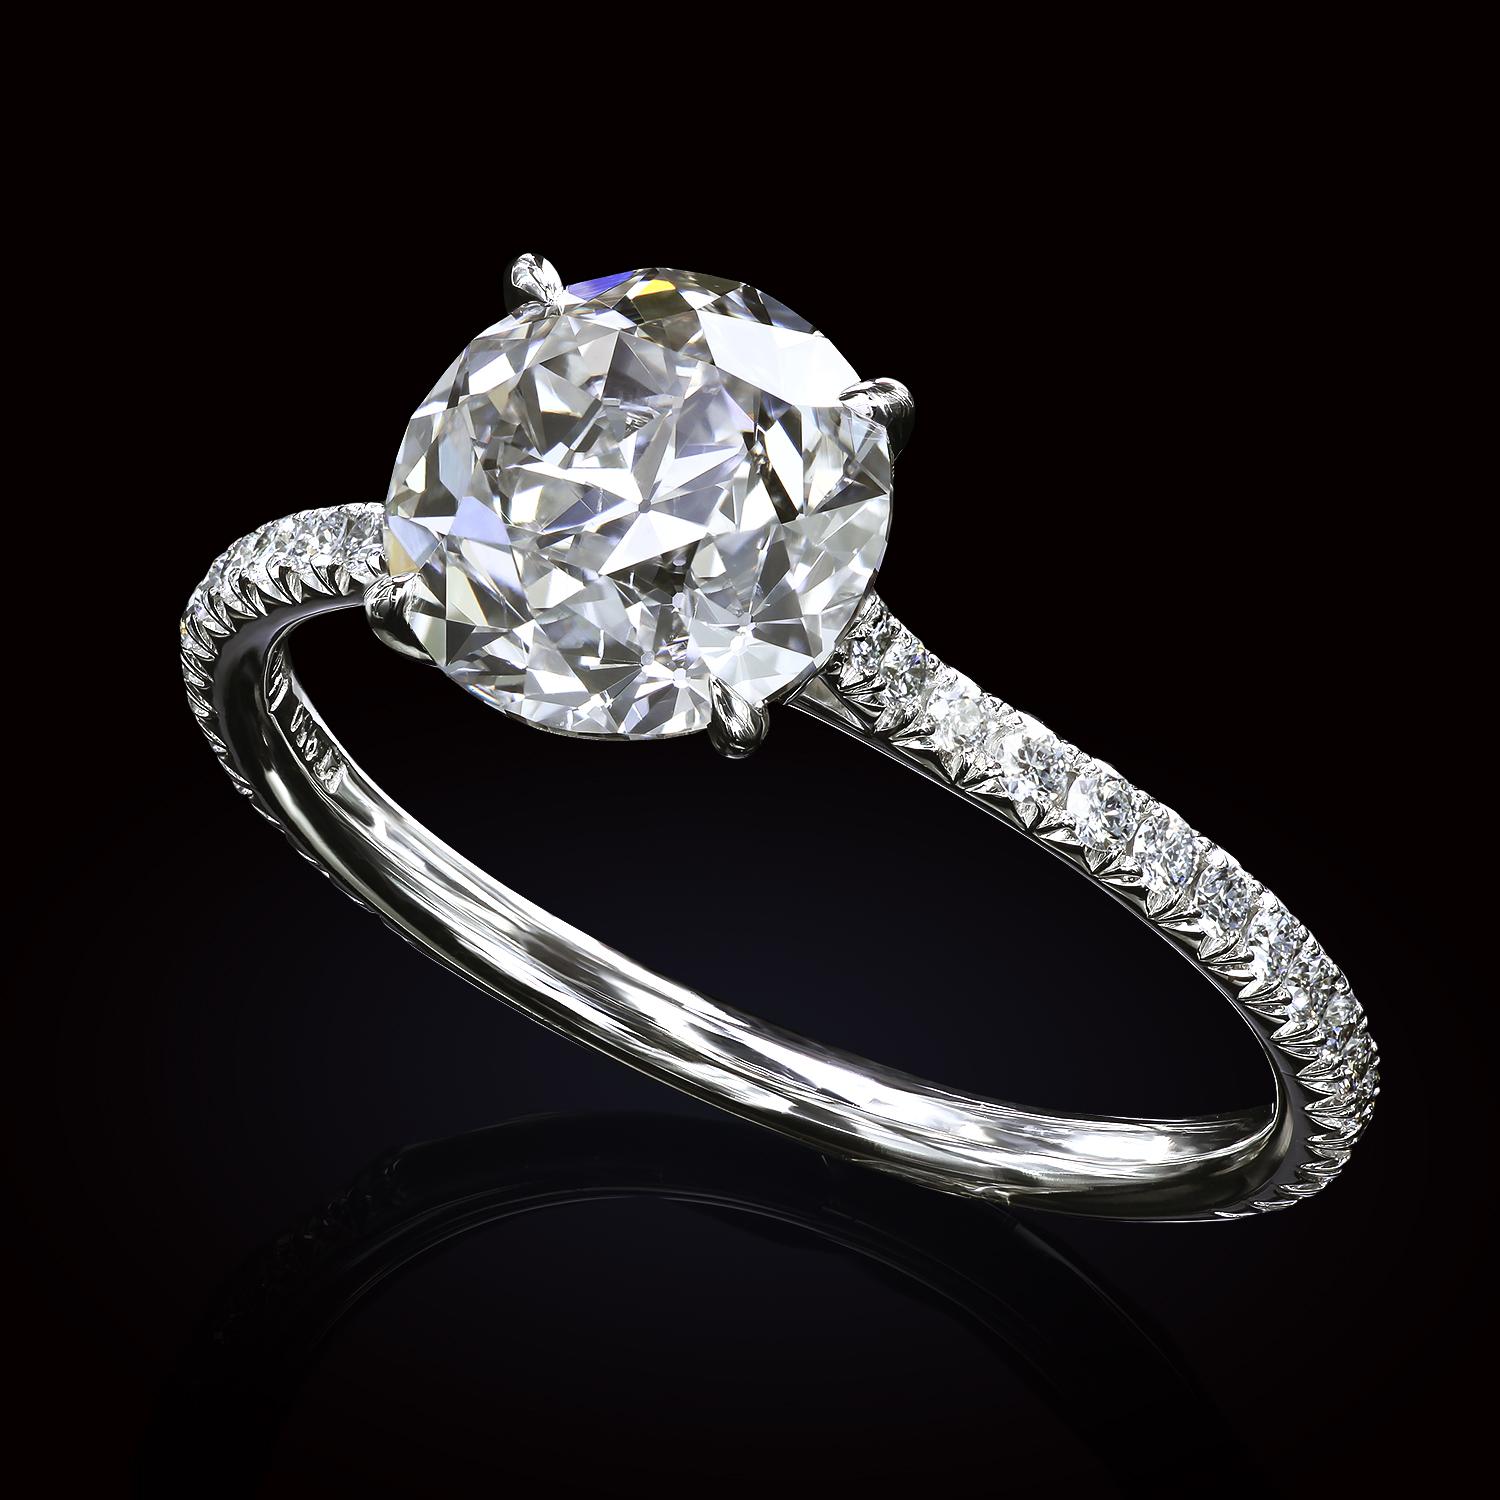 Leon Mege Platinum Engagement Ring with 1.66 Ct Old European Cut Diamond For Sale 3